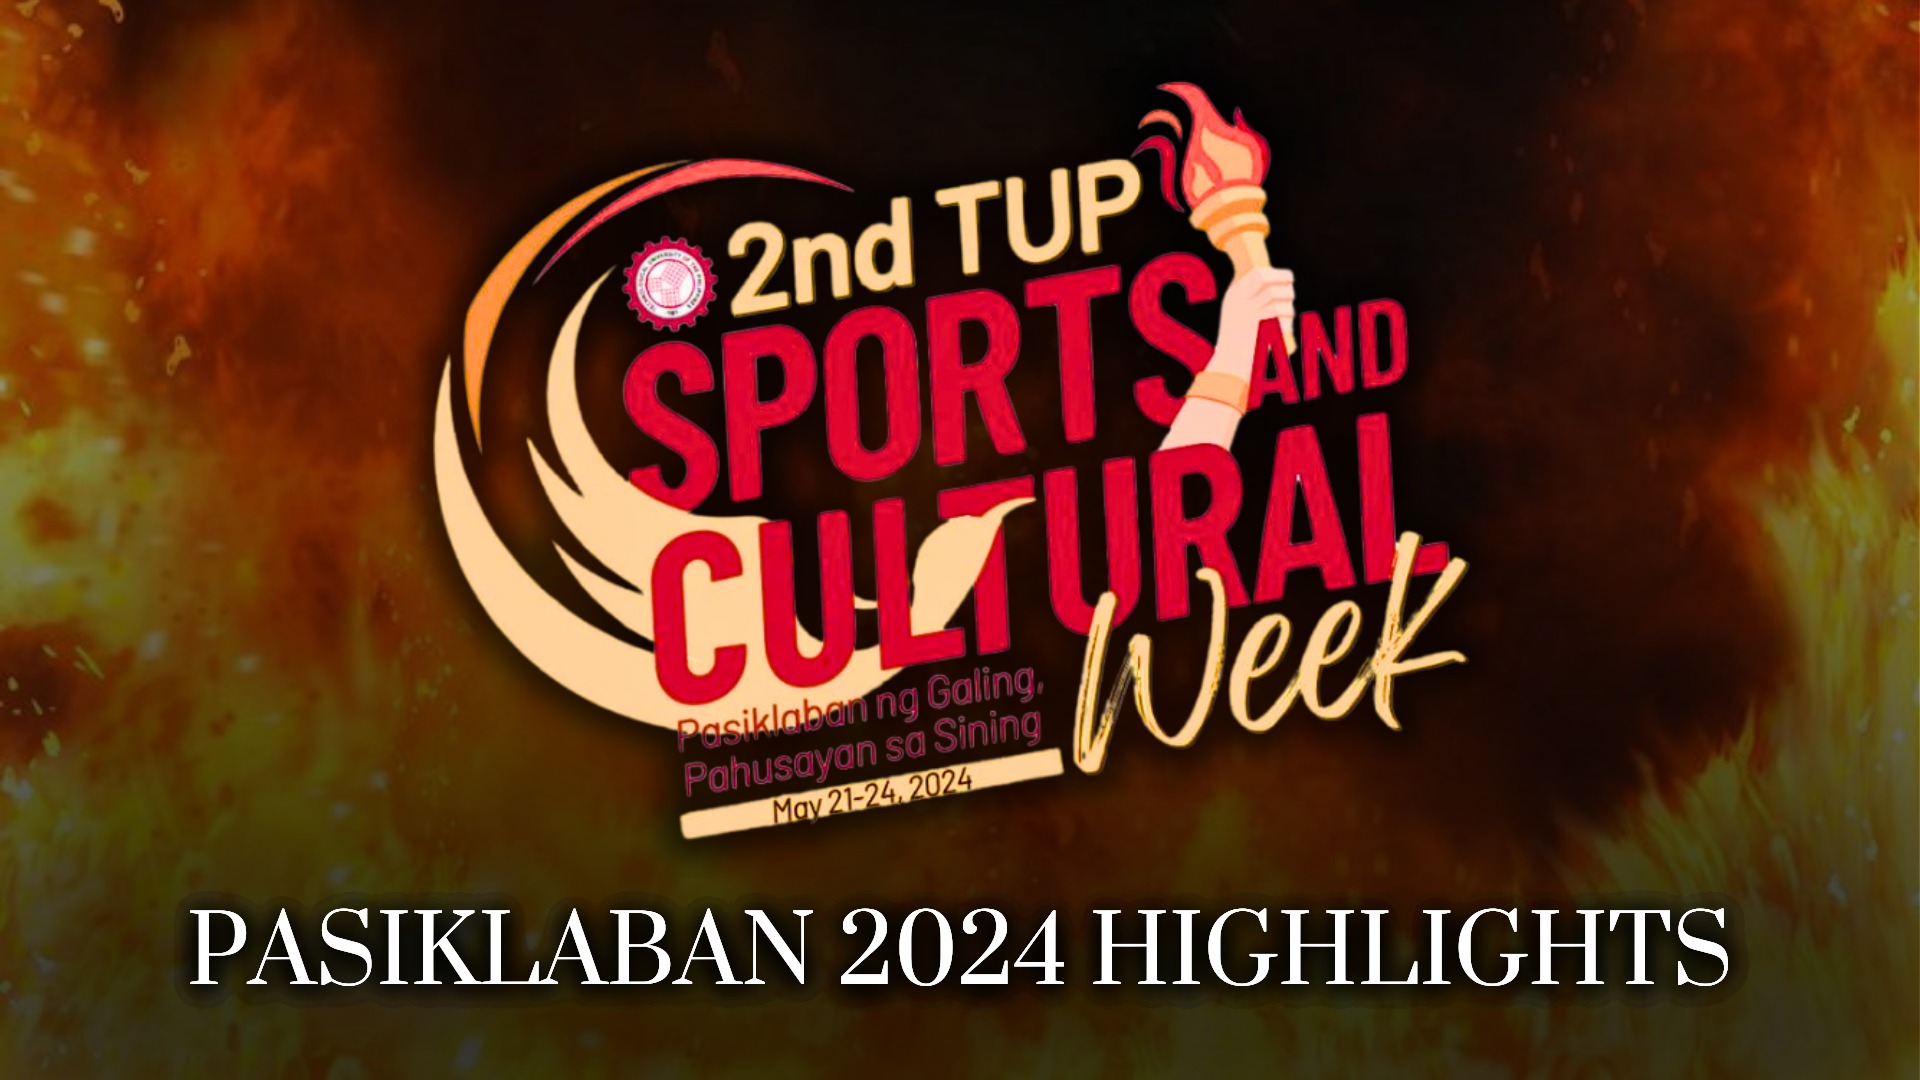 PASIKLABAN 2024: TUP's Ultimate Sports and Cultural Week